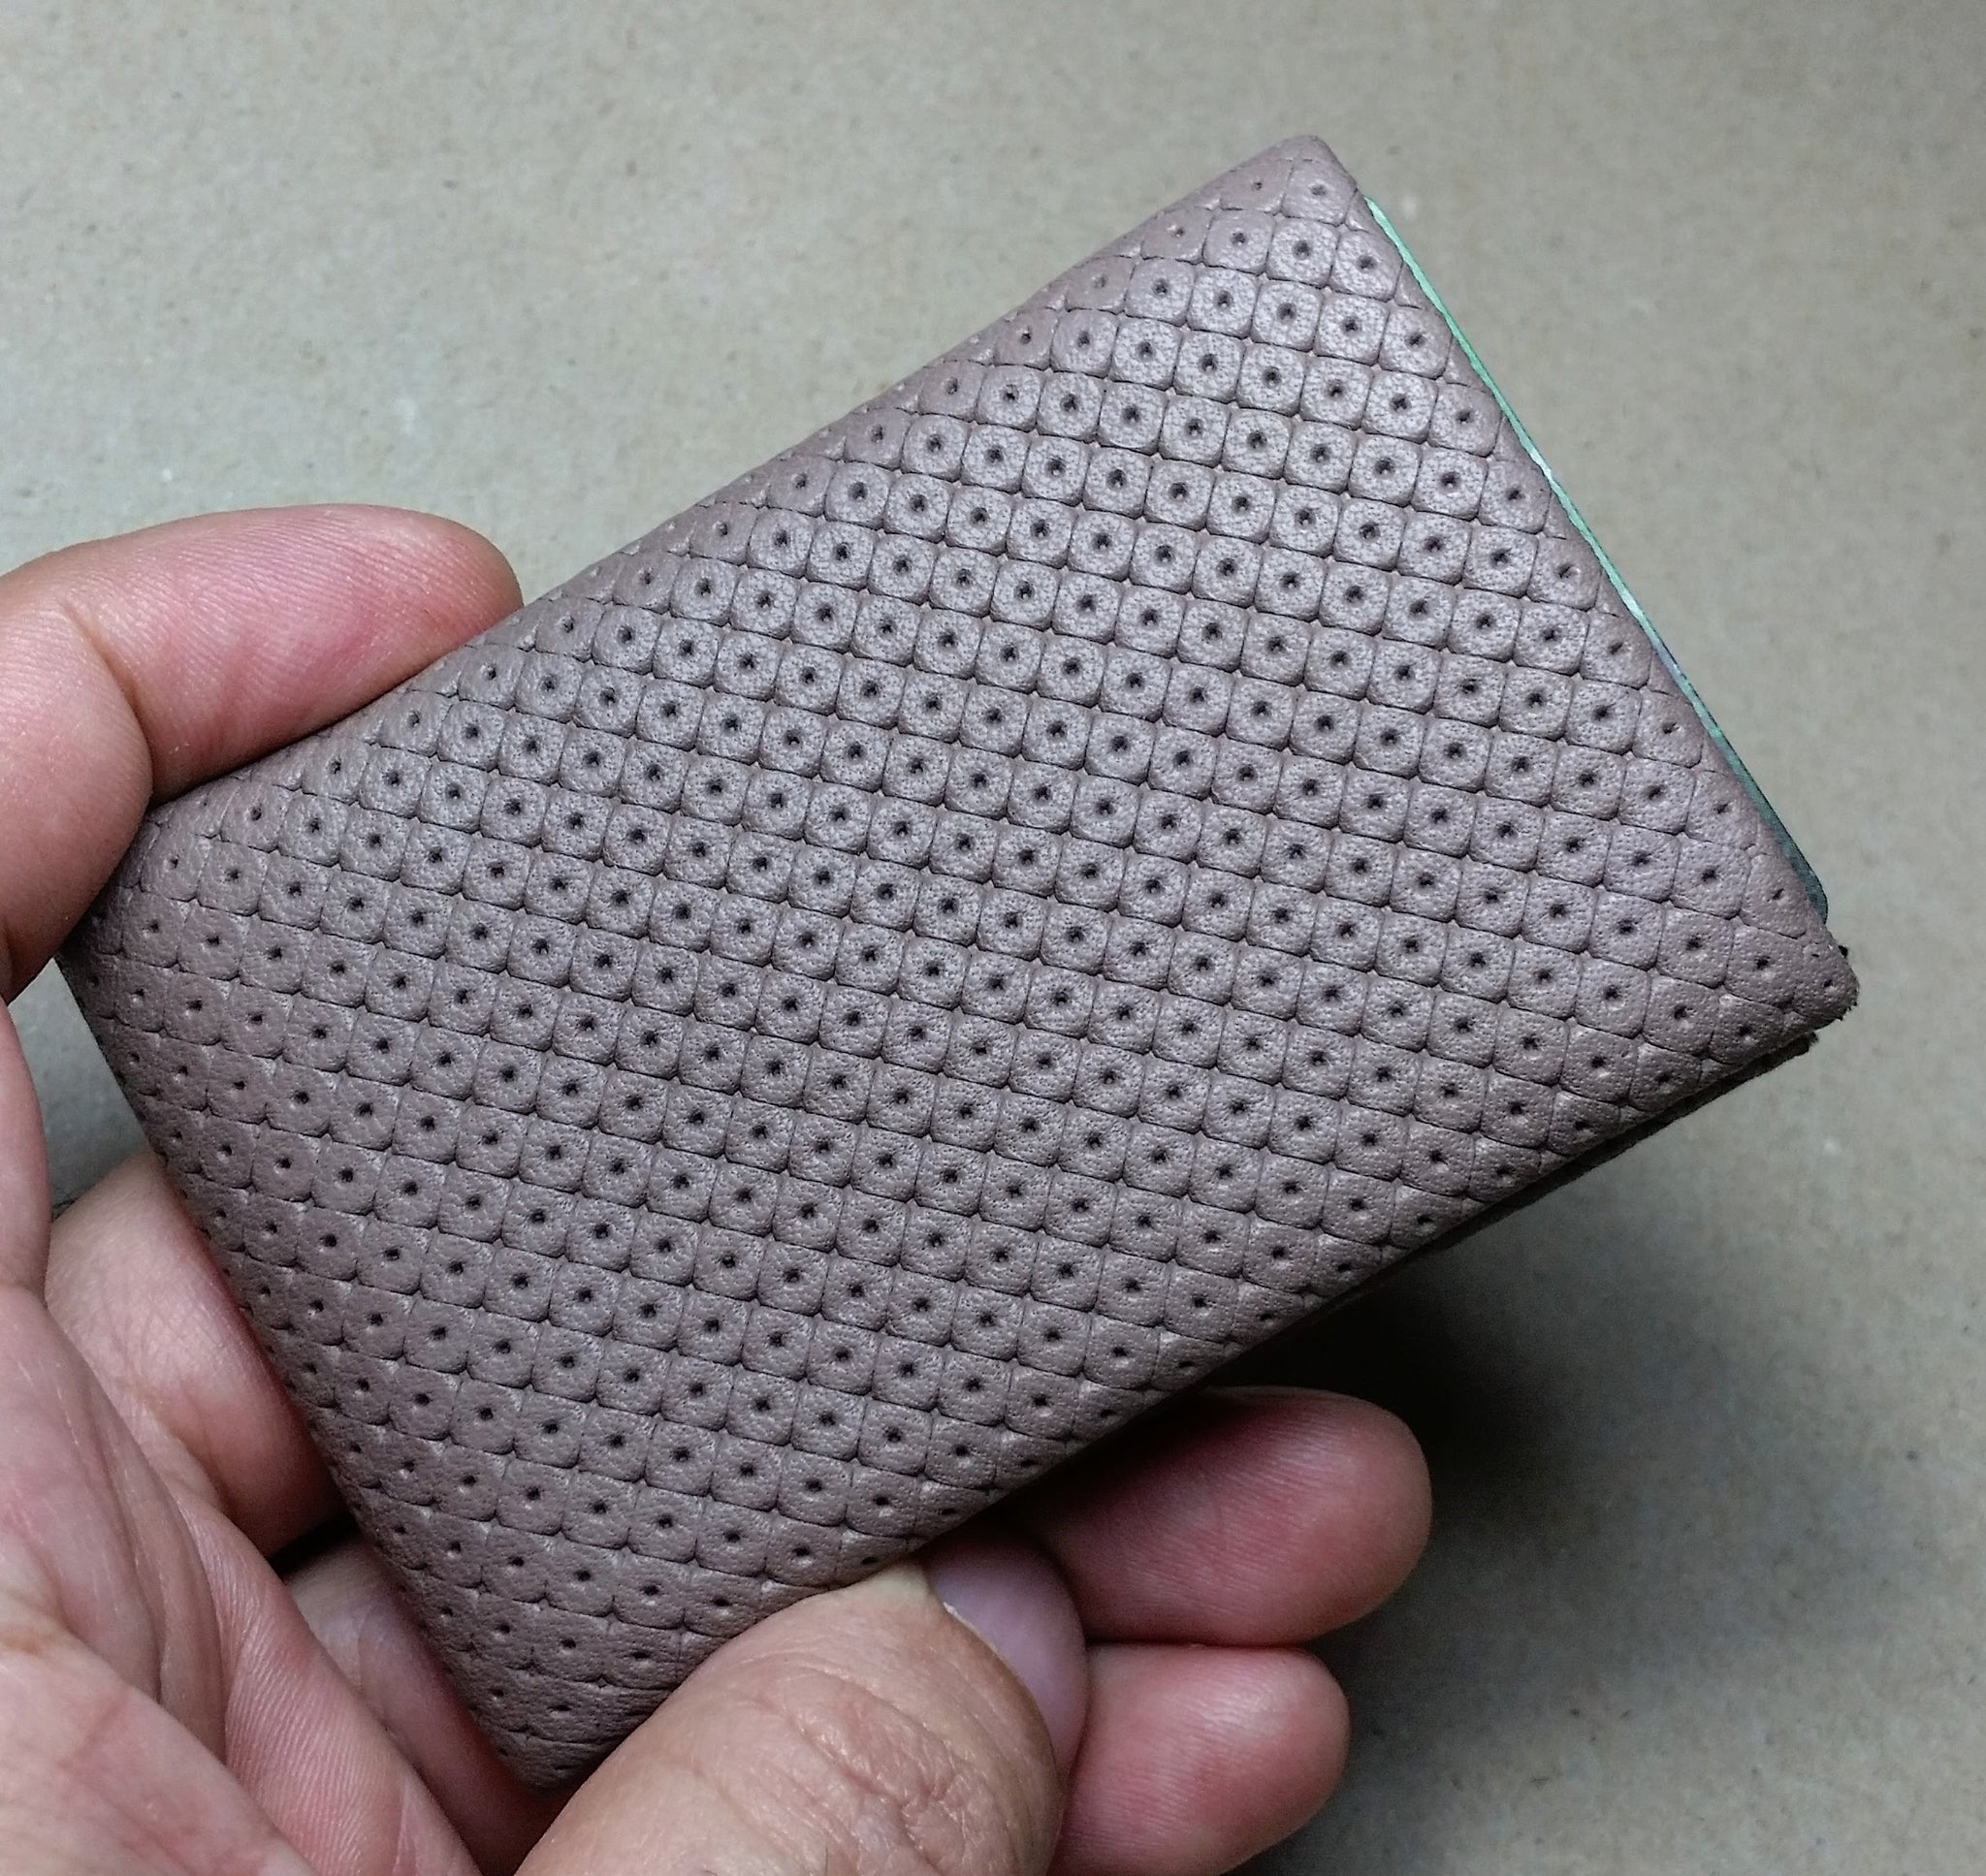 Nero Wallet 01 Design Series - The Ultimate Minimalist Wallet - Full RFID Blocking - minimalist mens wallet